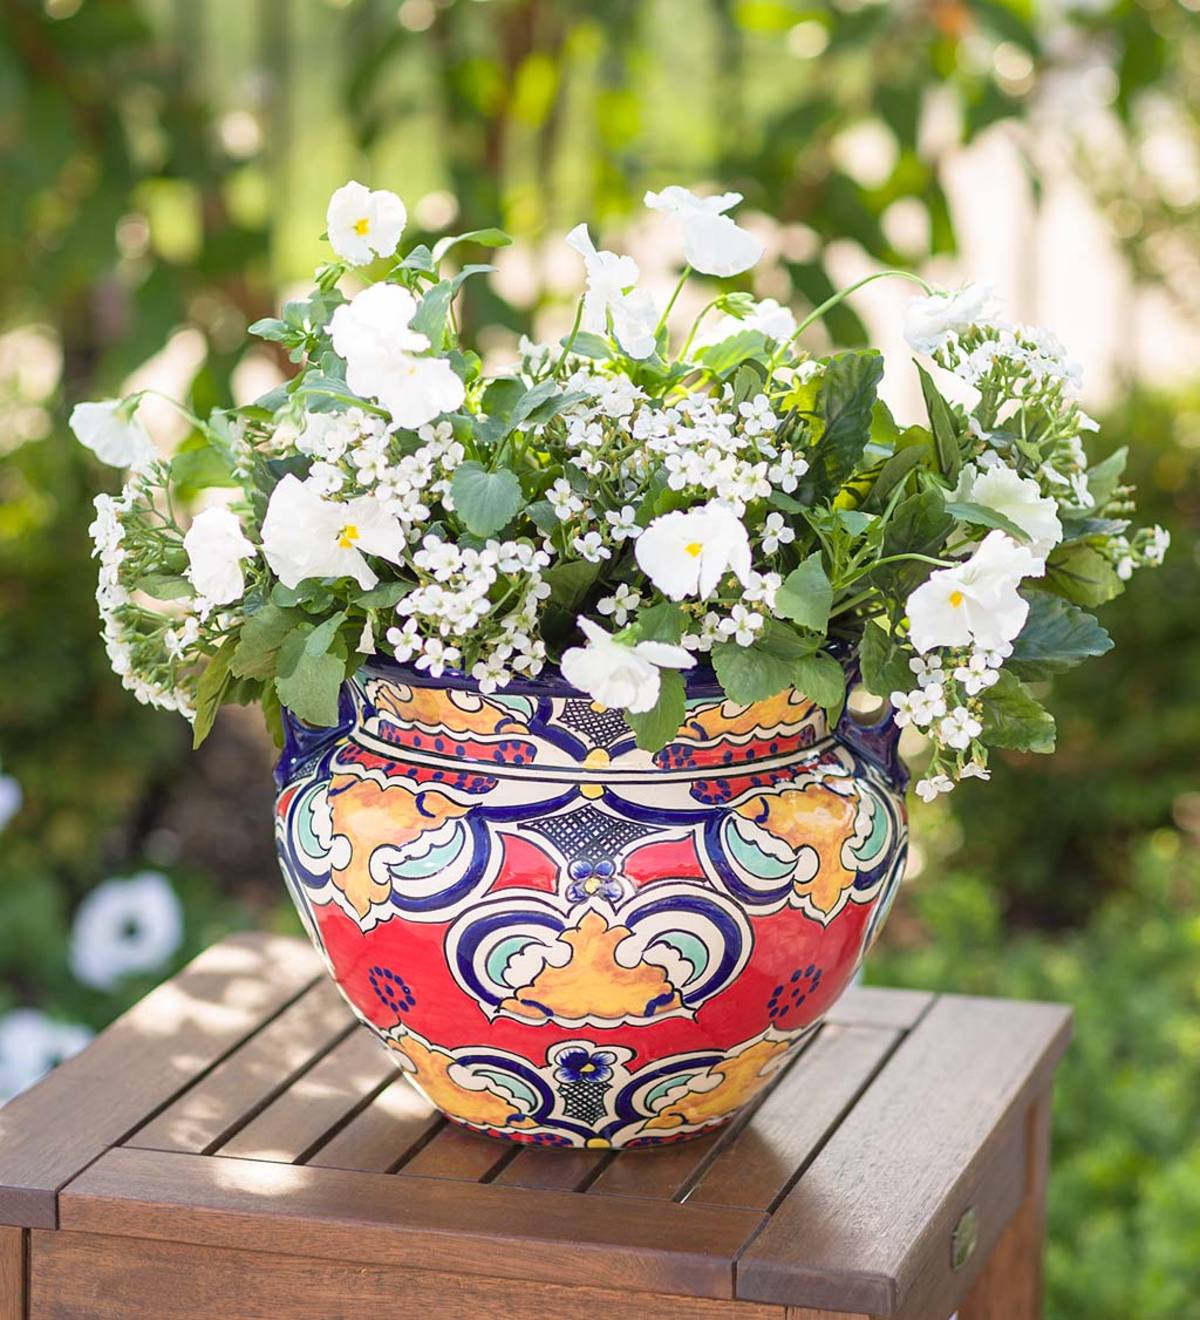 Authentic Mexican Talavera Ceramic Standing Planter Pot